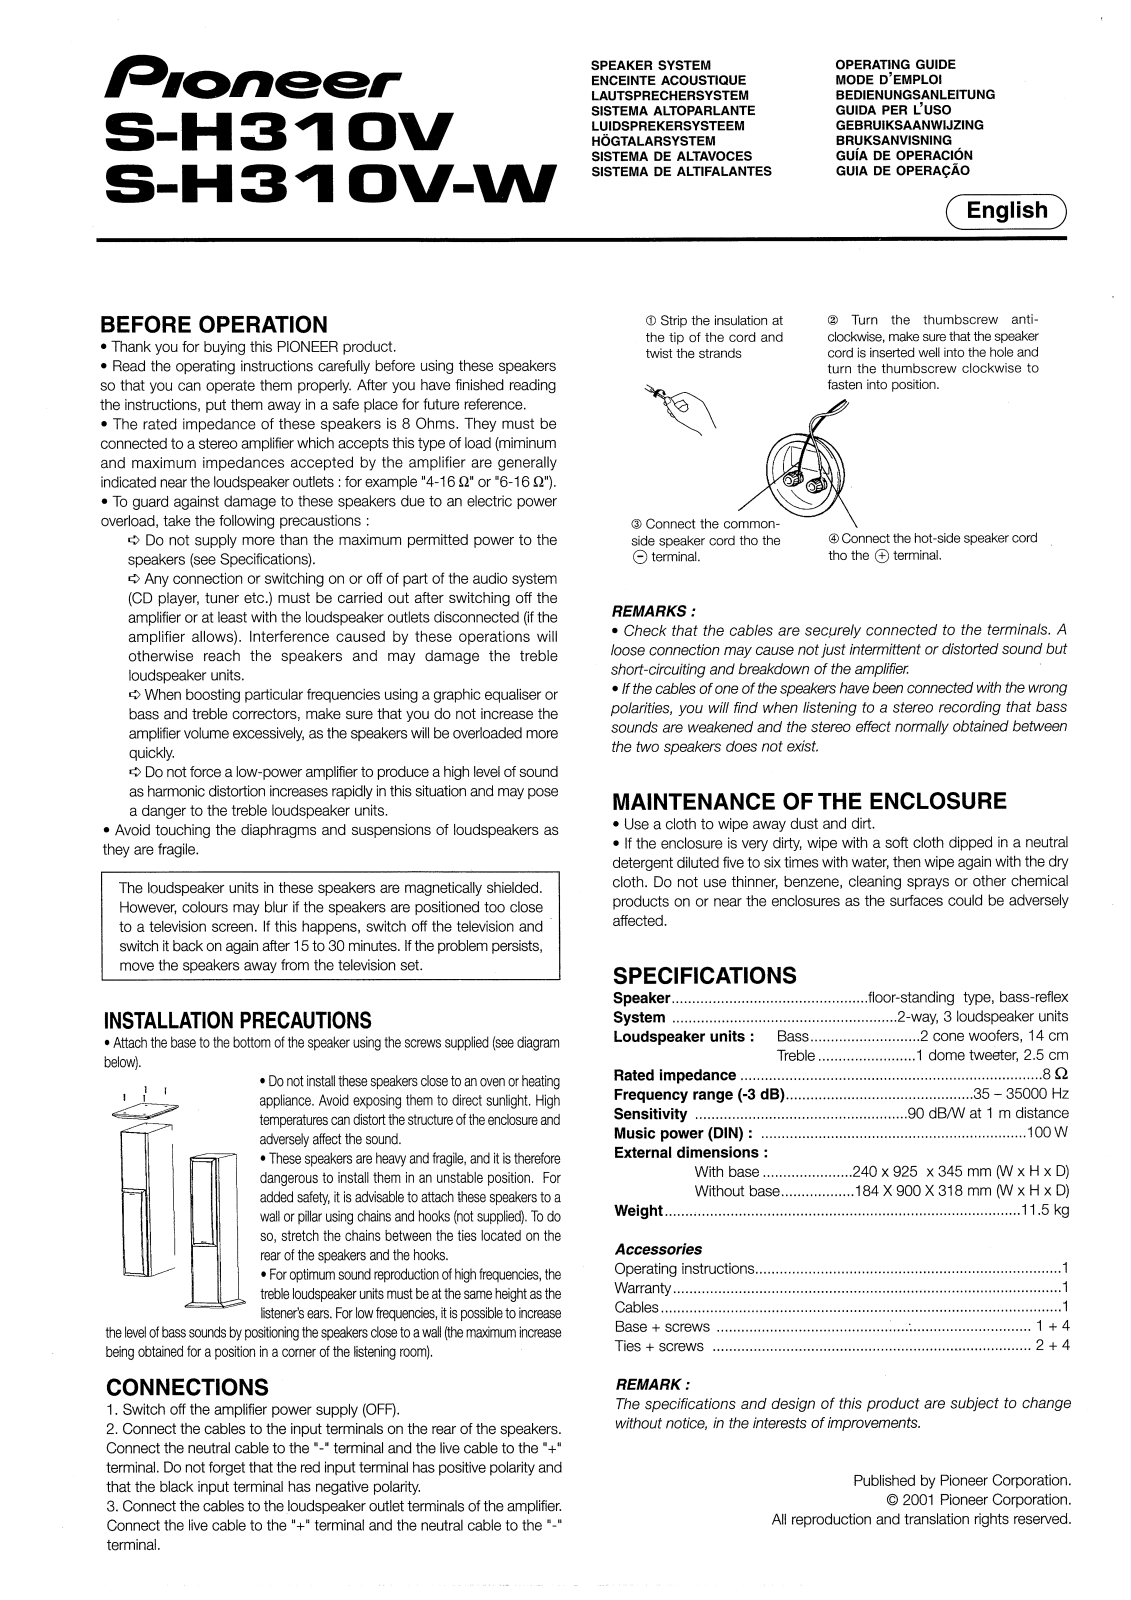 Pioneer S-H310V-W Manual